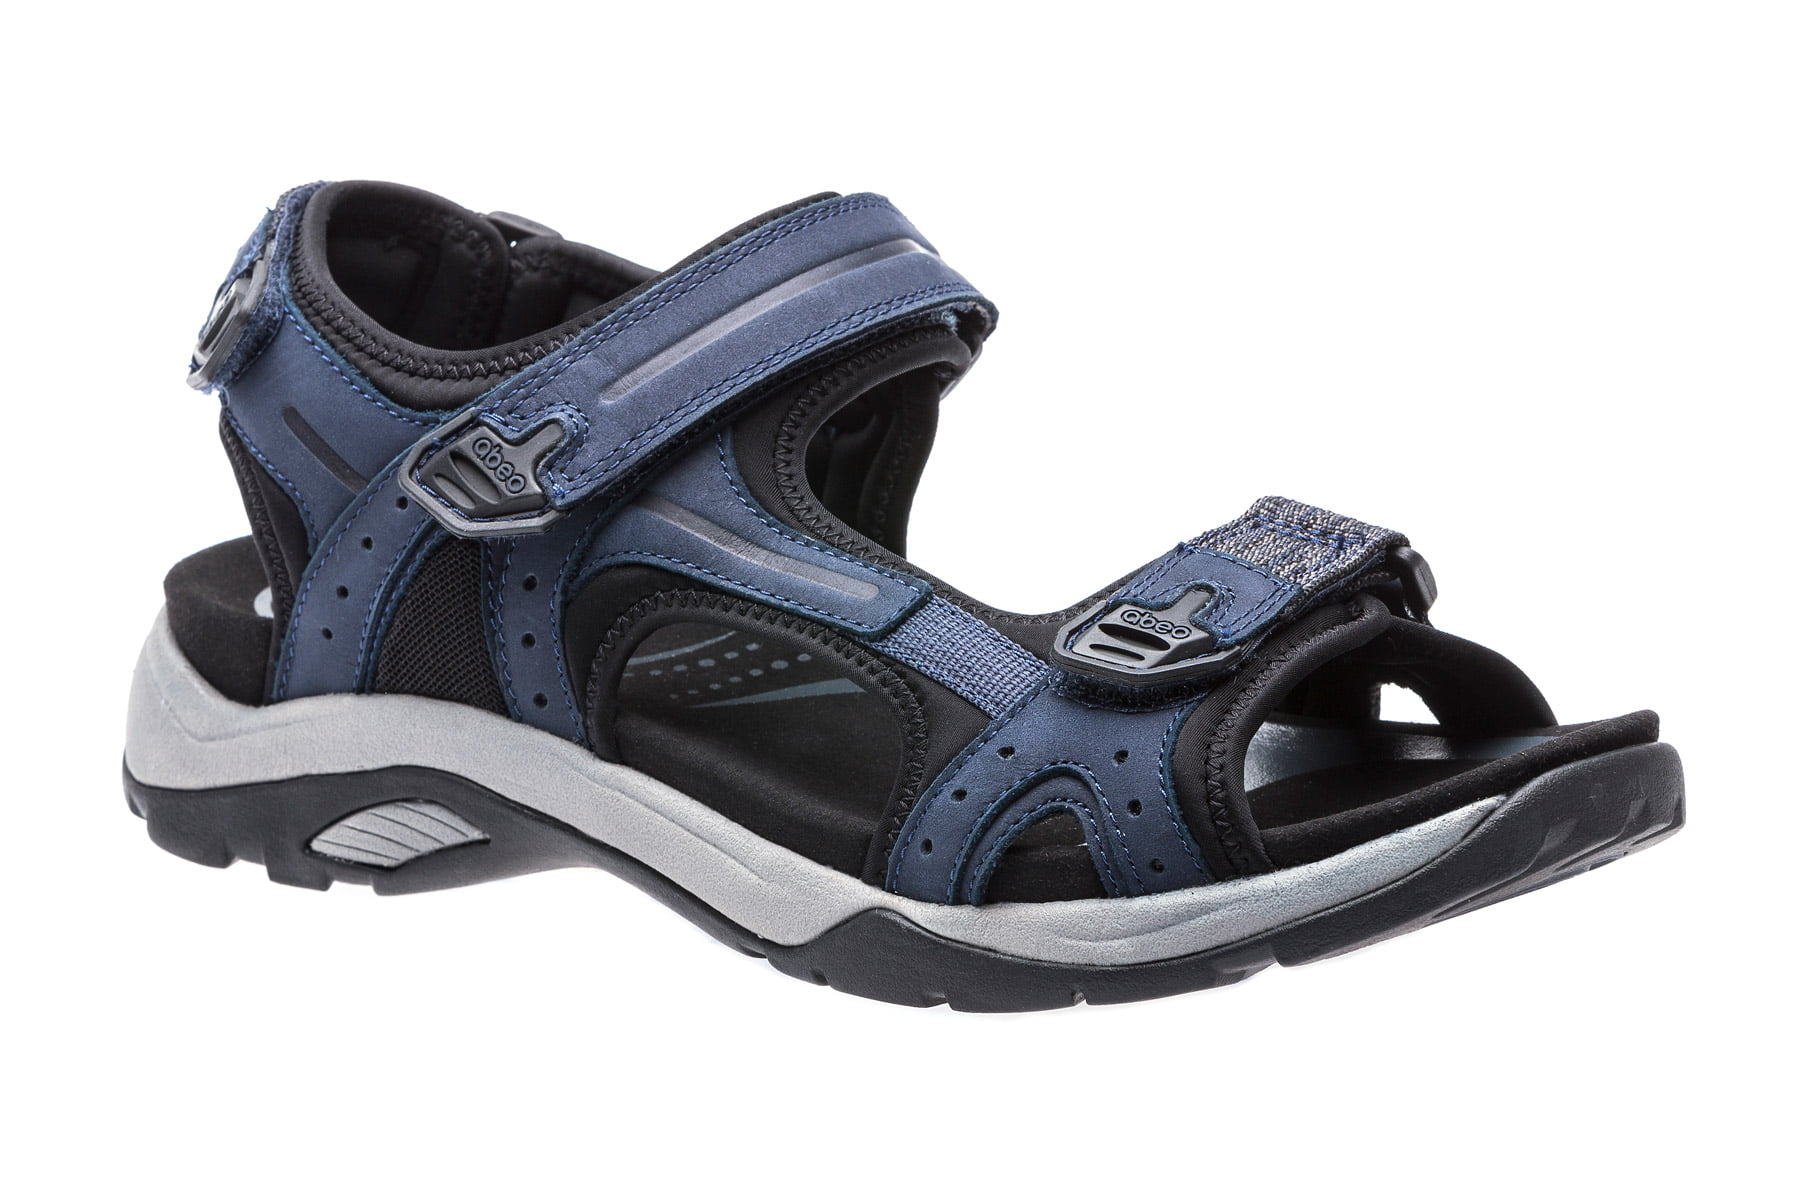 ABEO Footwear - ABEO Men's Cayucos Metatarsal - Sandals - Walmart.com ...